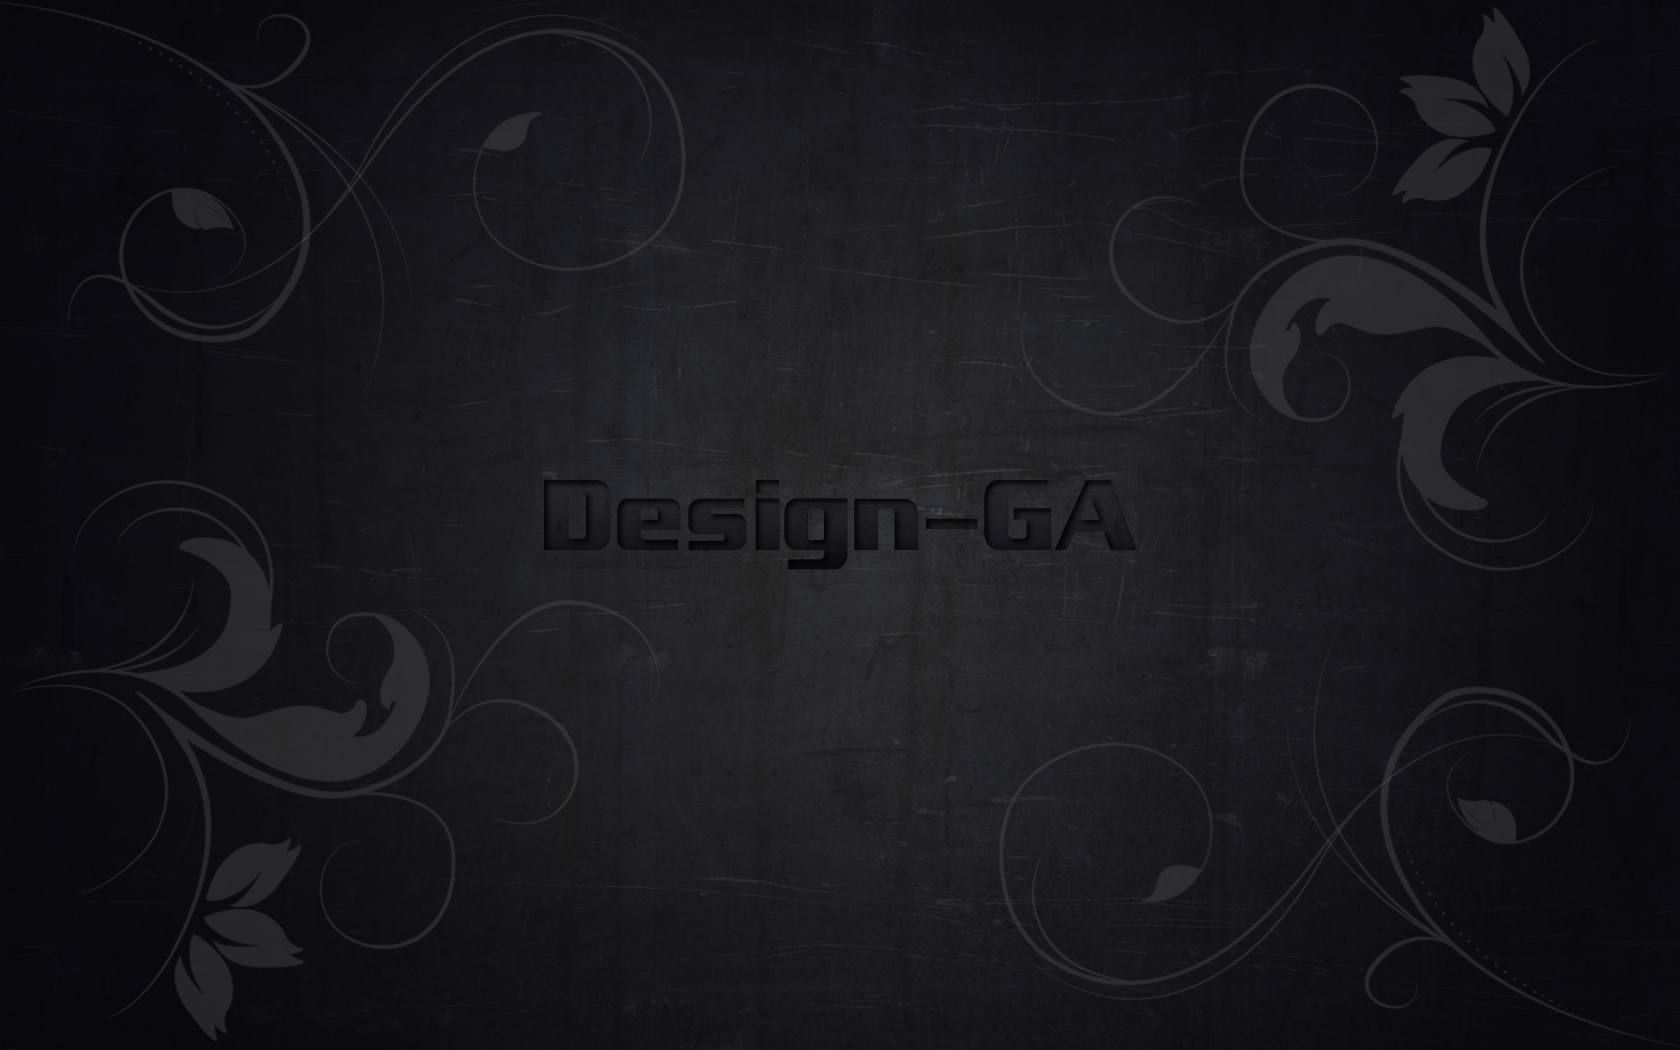 Entra In Design-GA